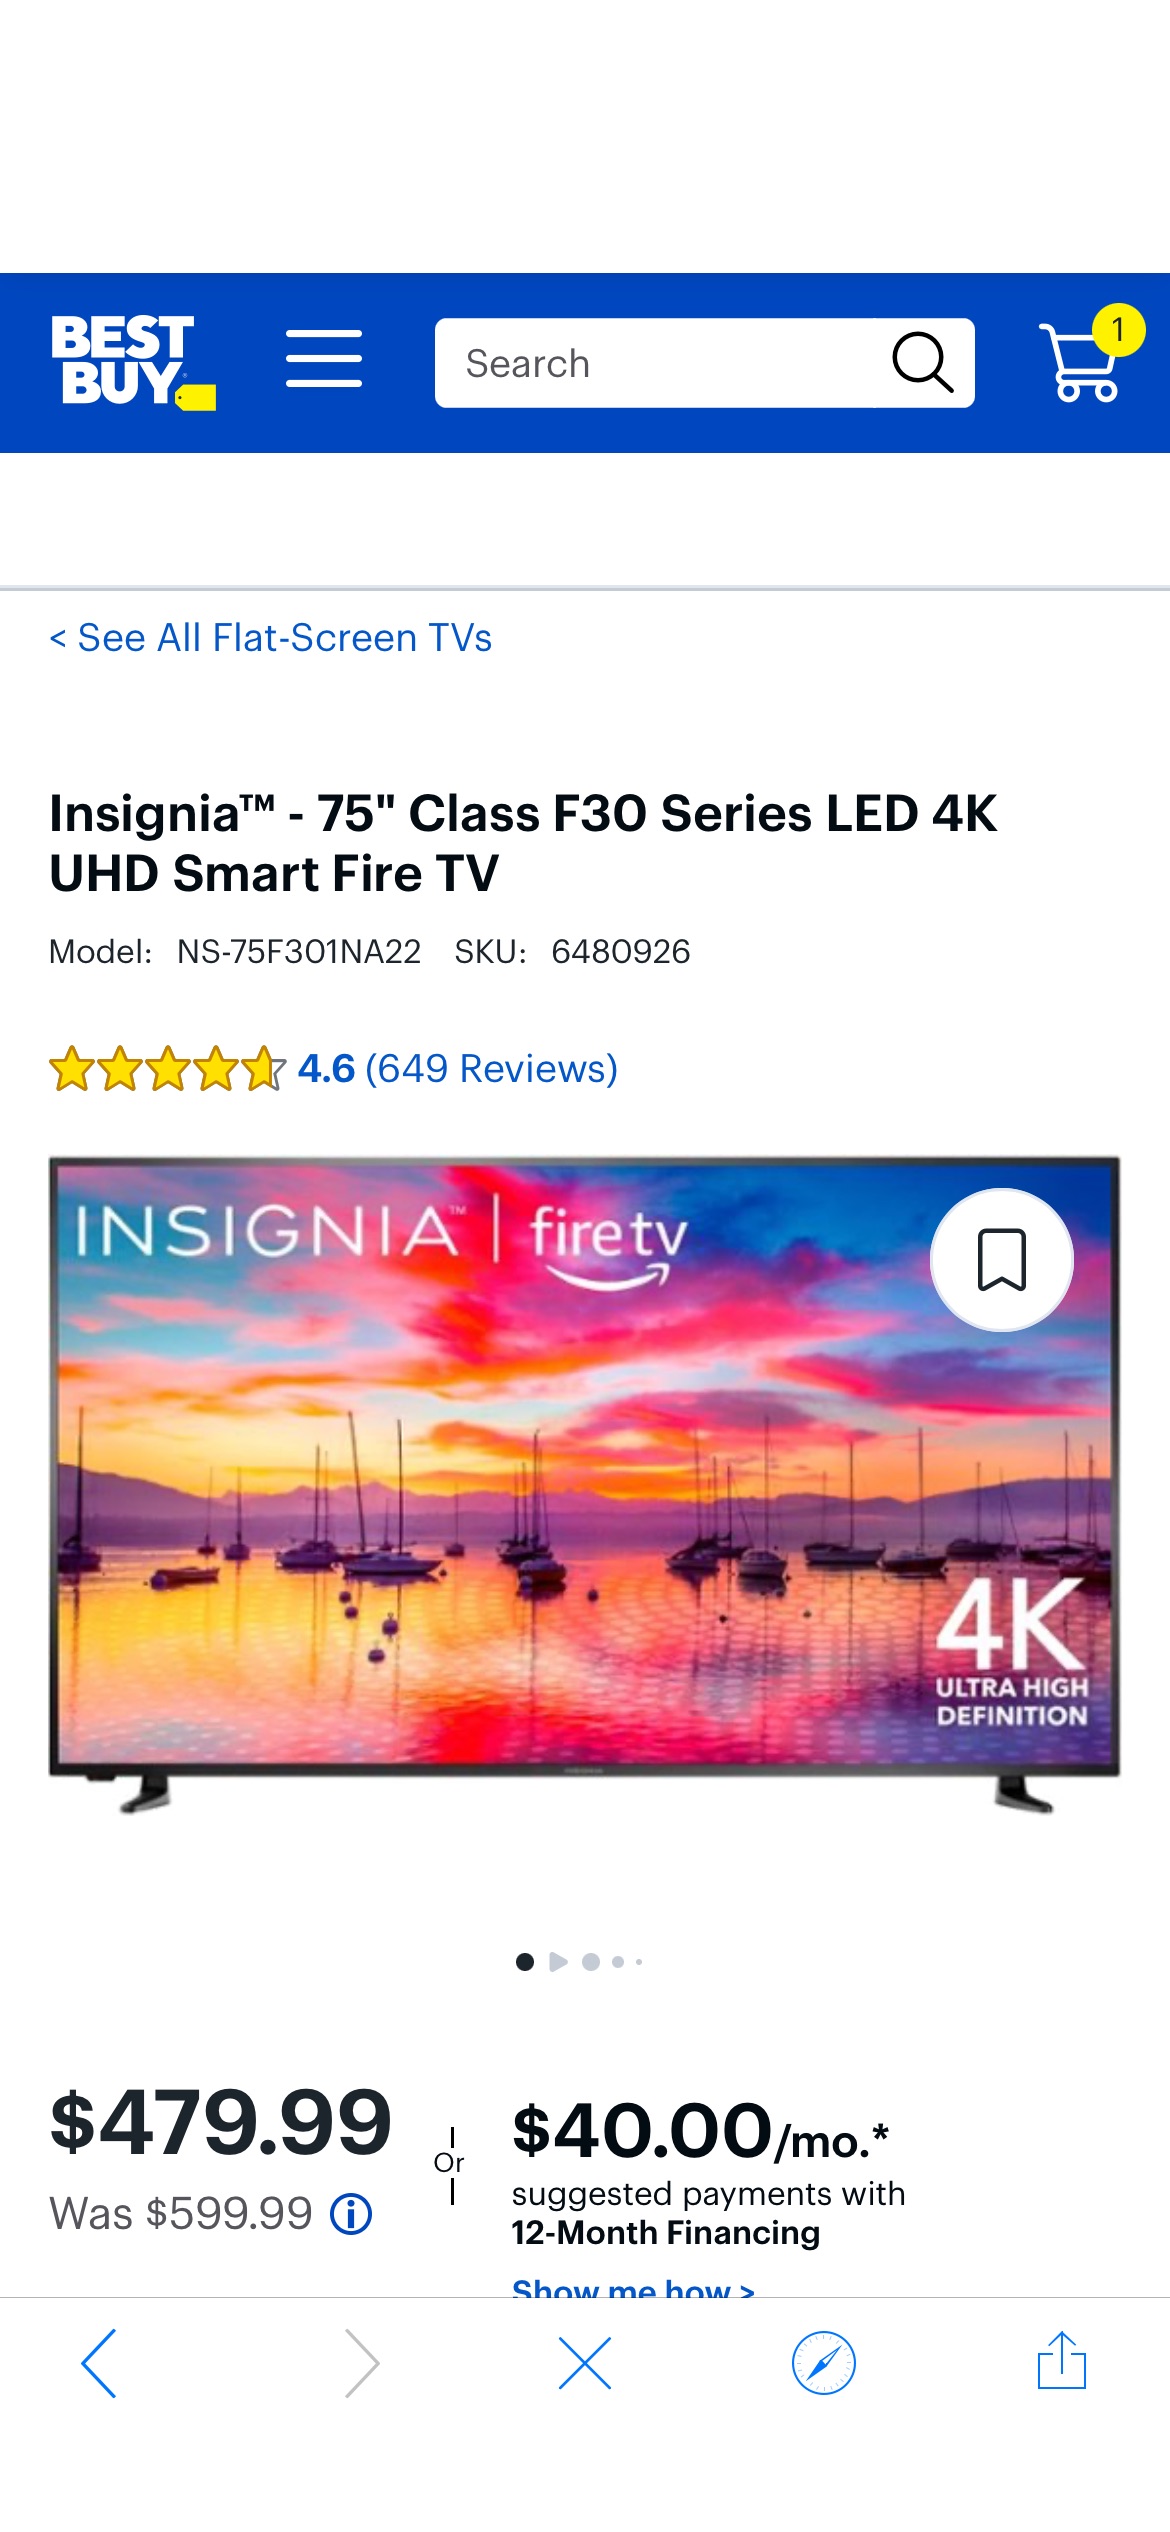 Insignia™ 75" Class F30 Series LED 4K UHD Smart Fire TV NS-75F301NA22 - Best Buy